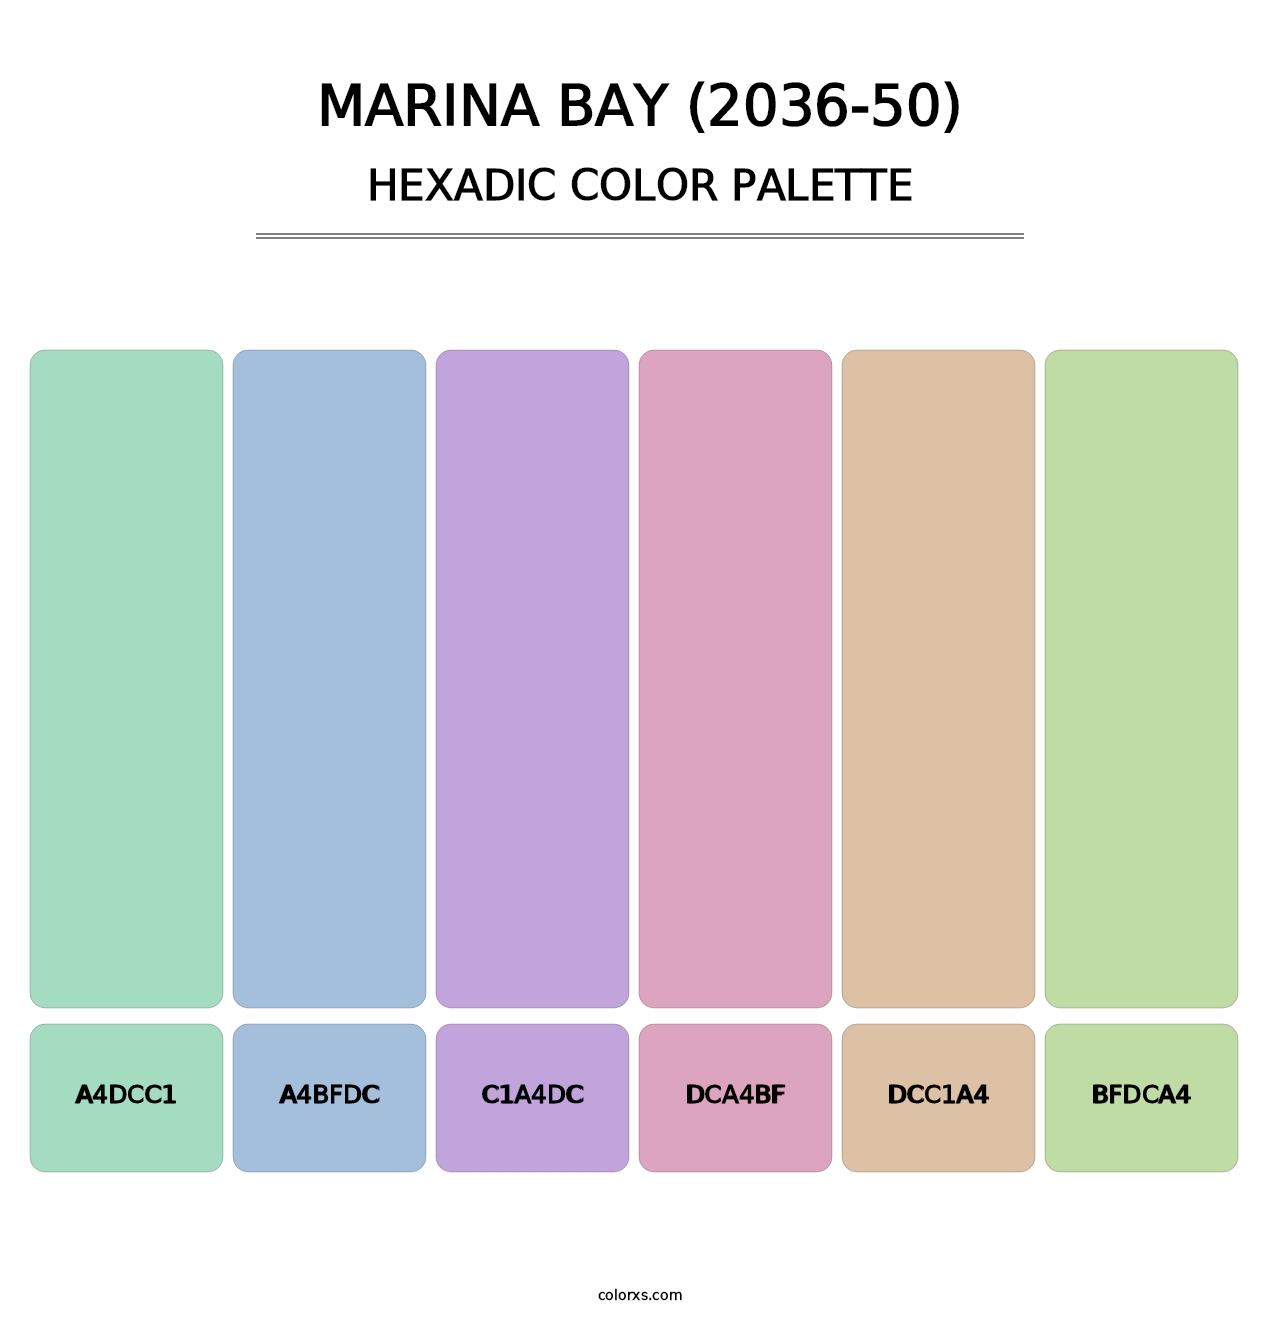 Marina Bay (2036-50) - Hexadic Color Palette